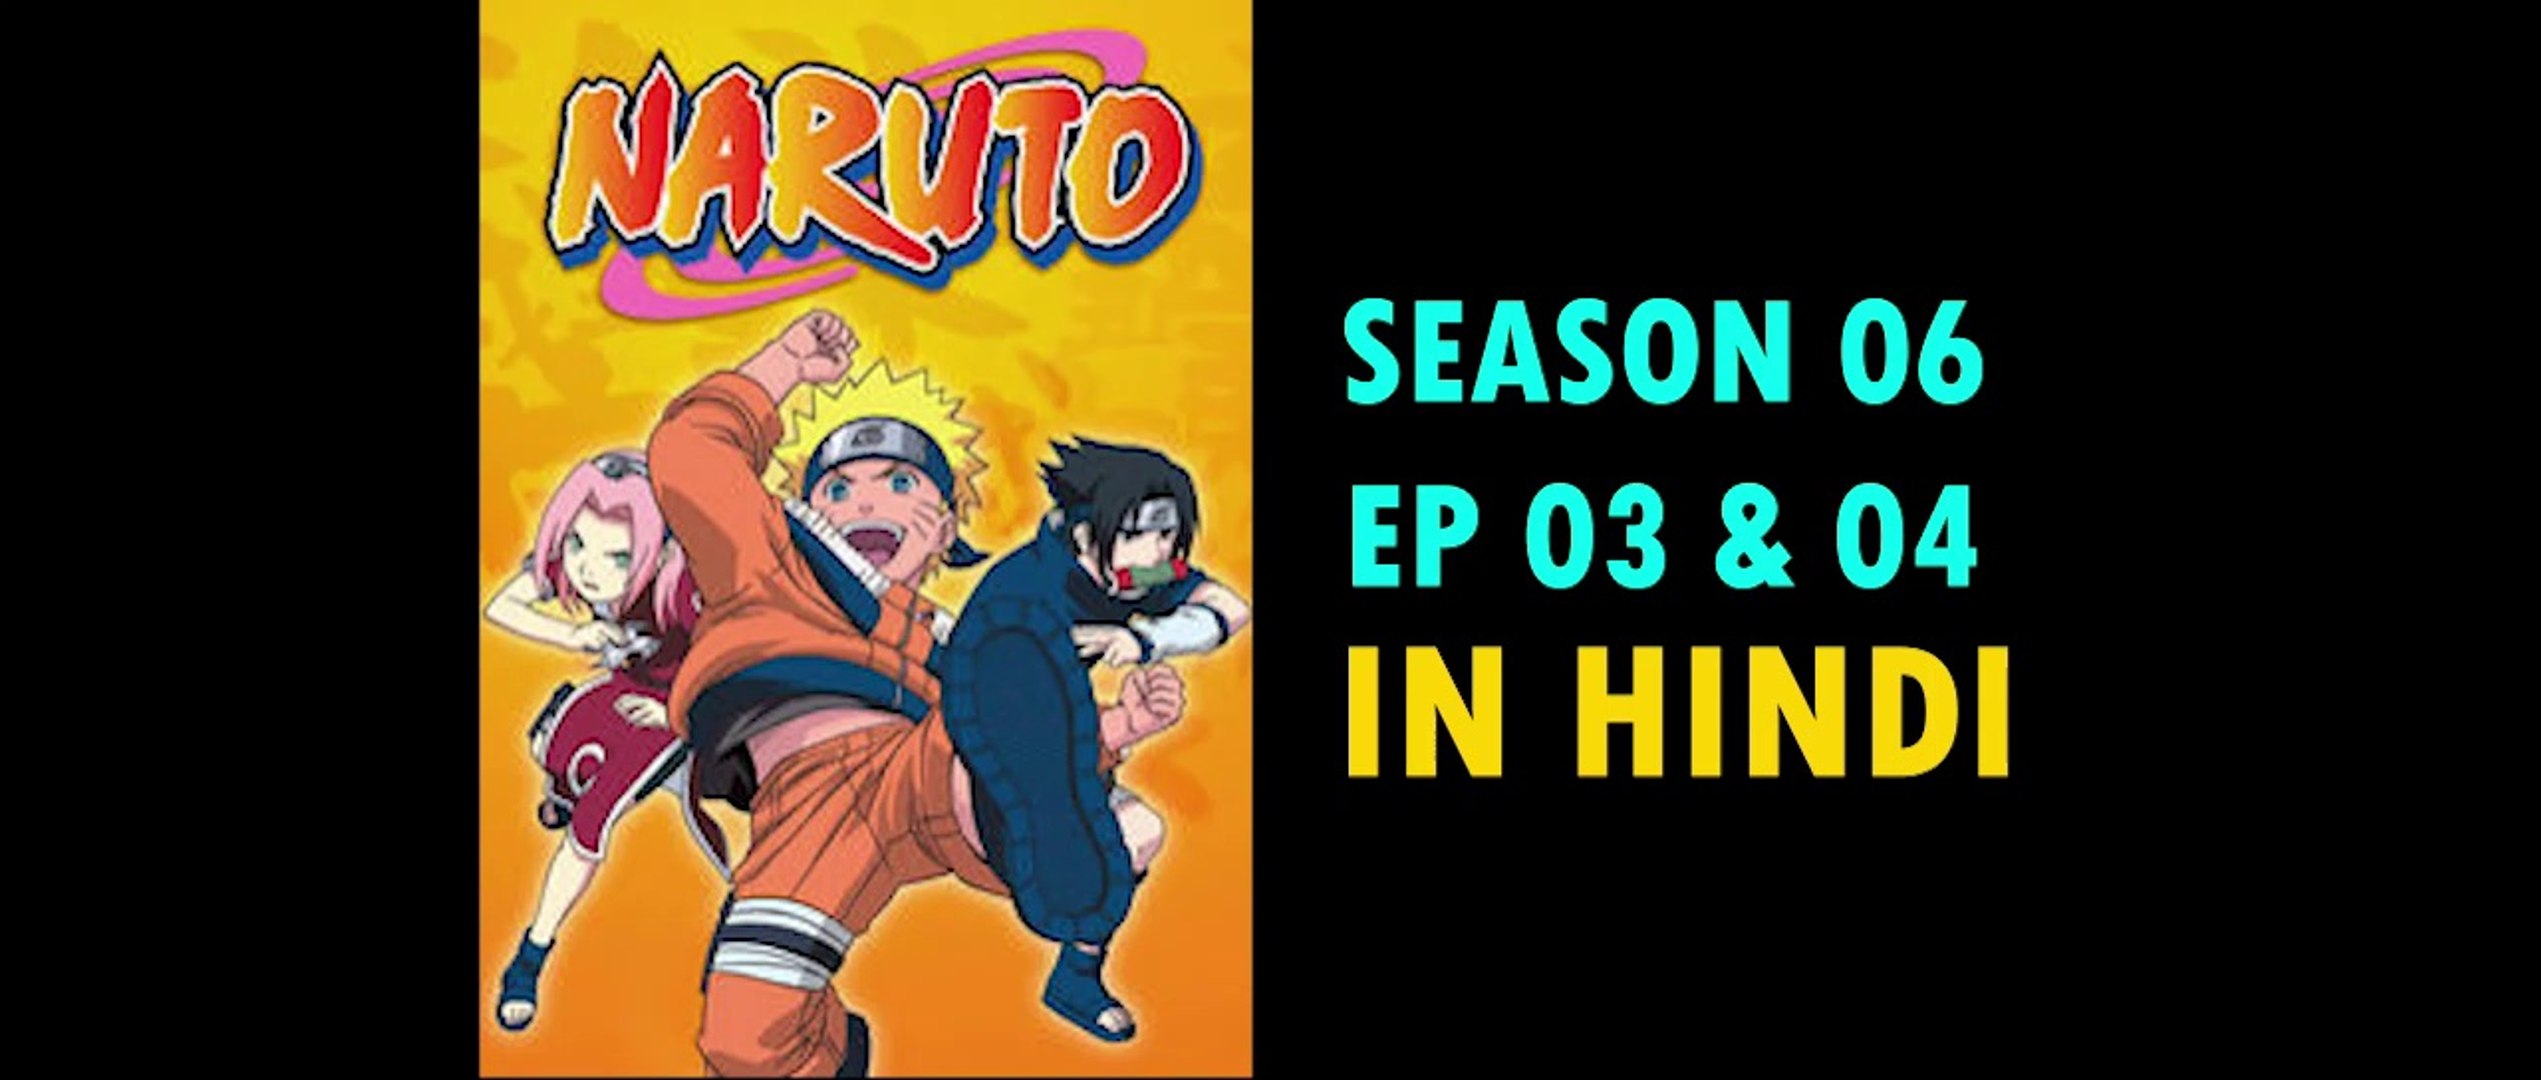 Naruto shippuden episode 138 in hindi, explain by